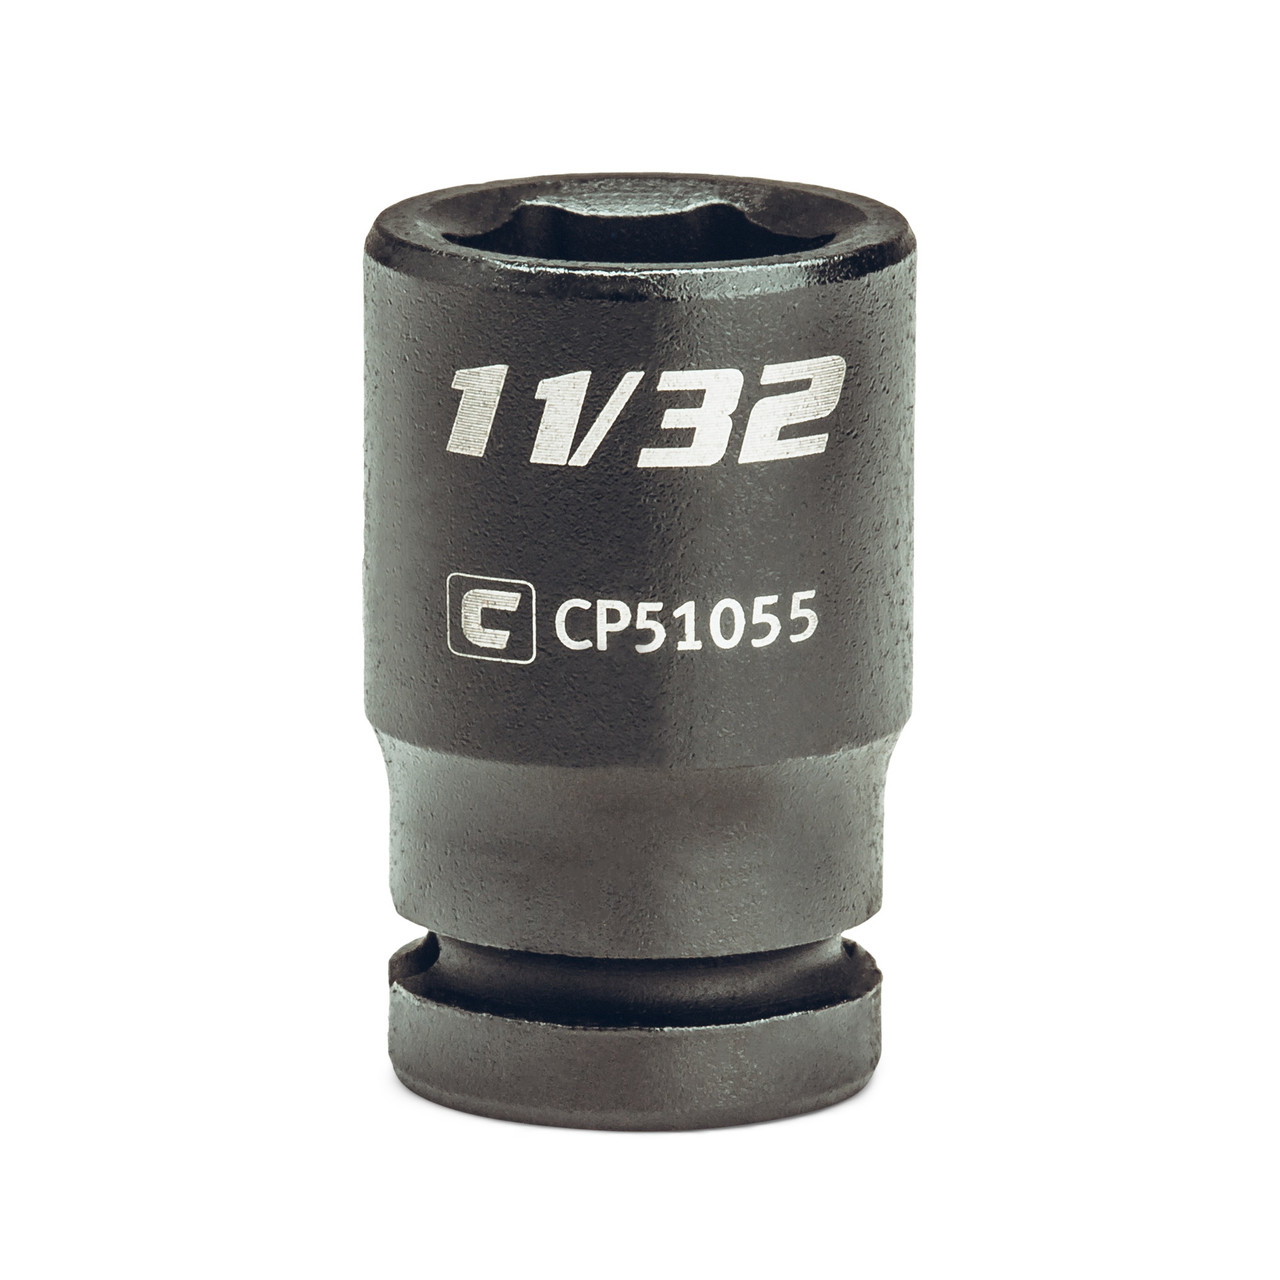 Capri Tools 11/32-Inch Shallow Impact Socket, 1/4-Inch Drive, 6-Point, SAE